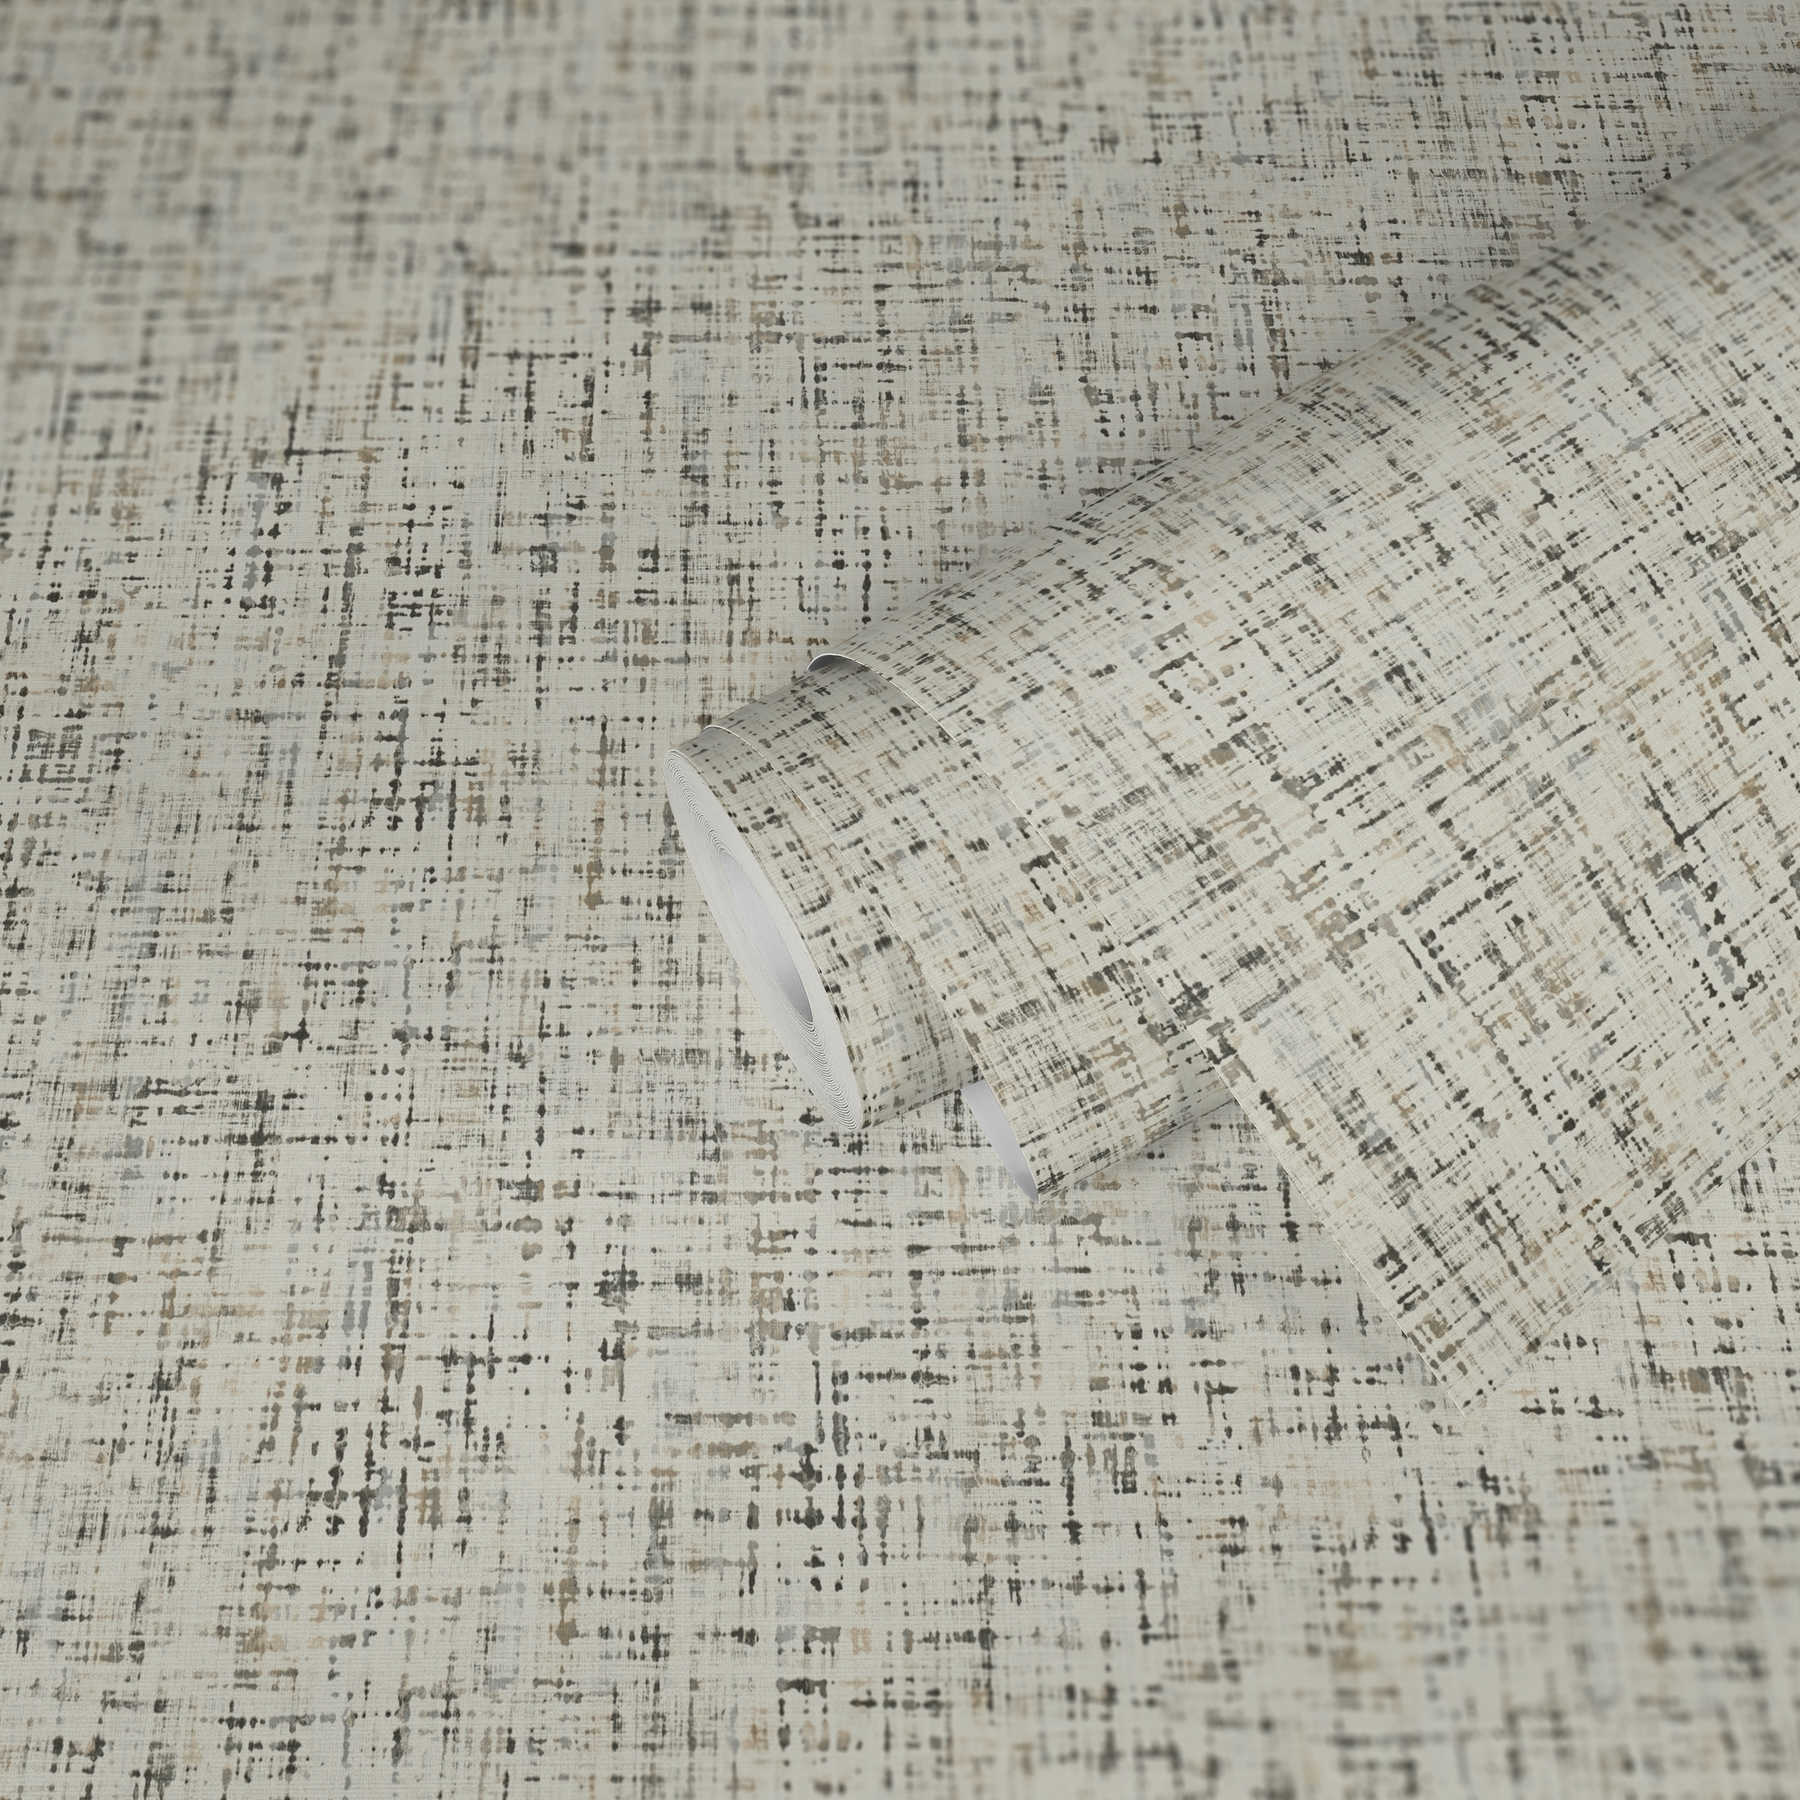             Mustertapete Tweed-Optik meliert, Textil-Look – Weiß, Schwarz, Braun
        